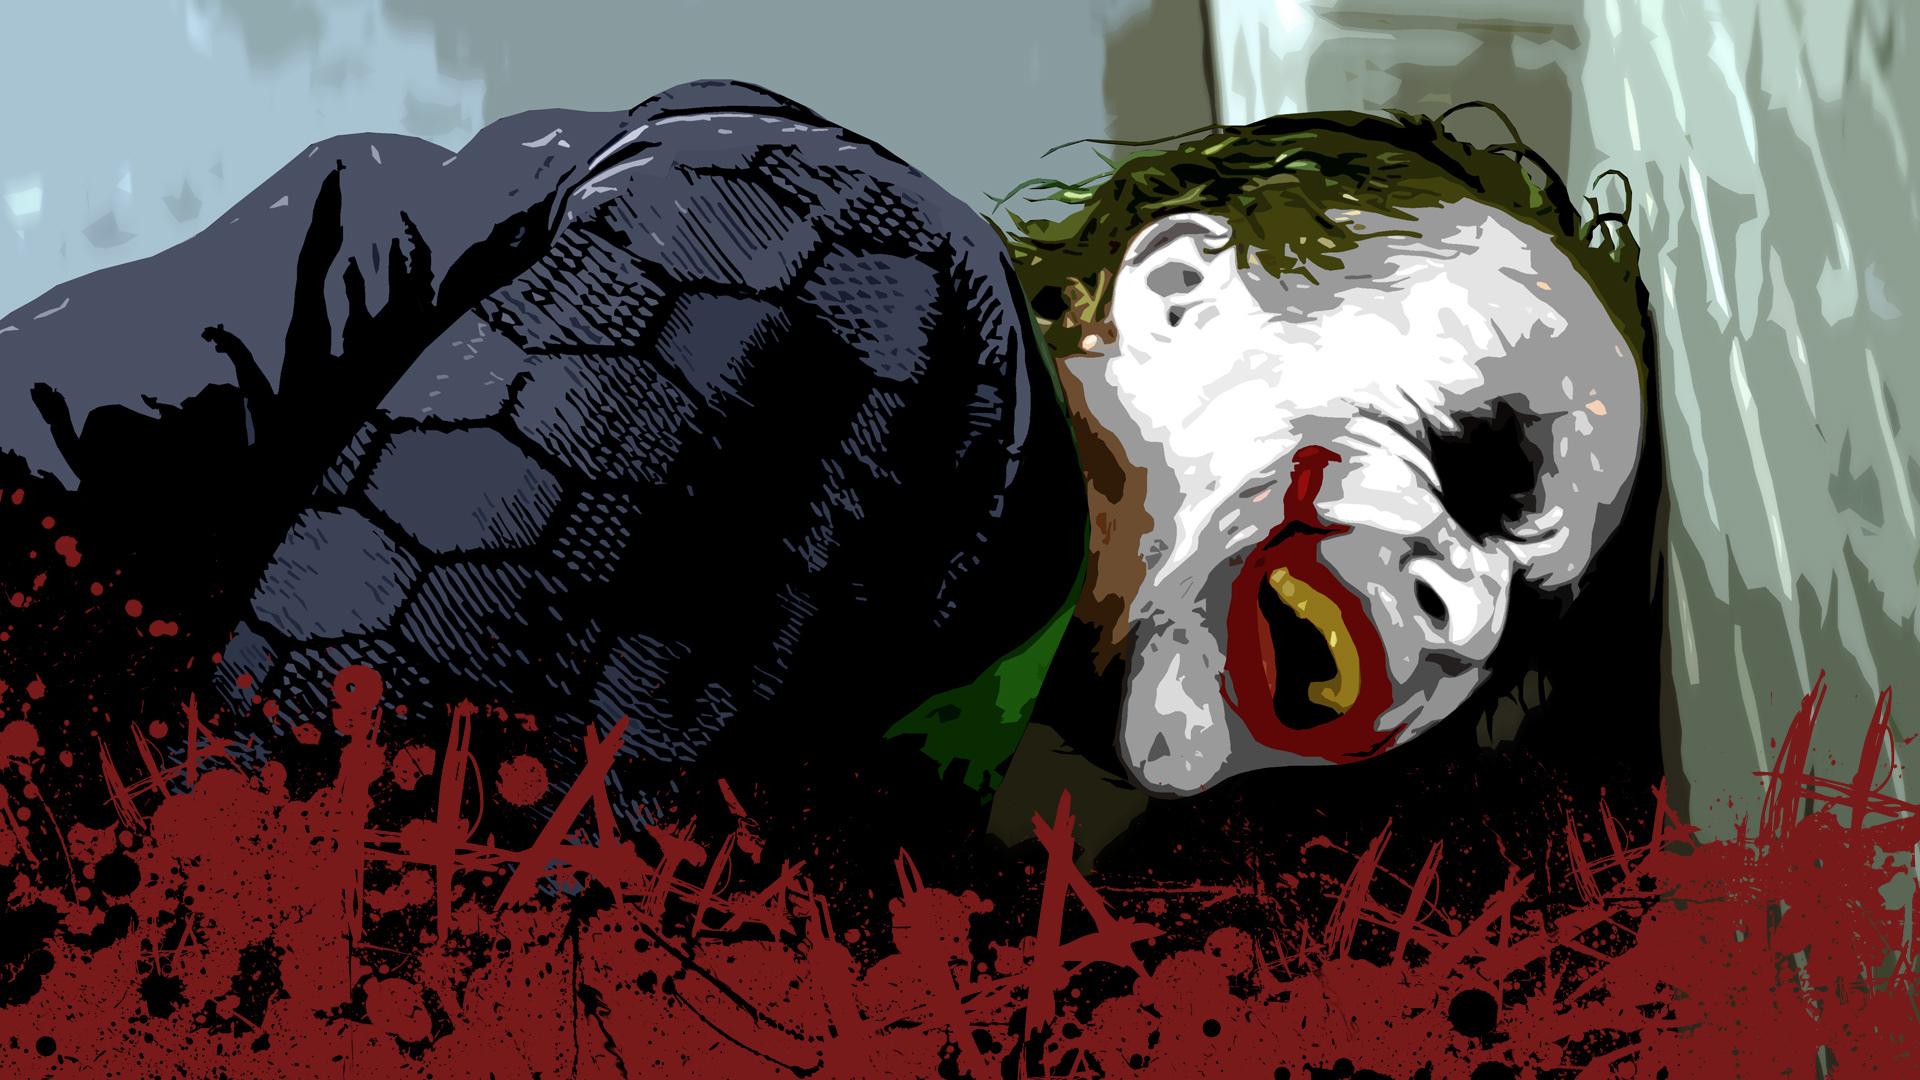 Download 1920x1080 Laughing Joker in The Dark Knight wallpaper